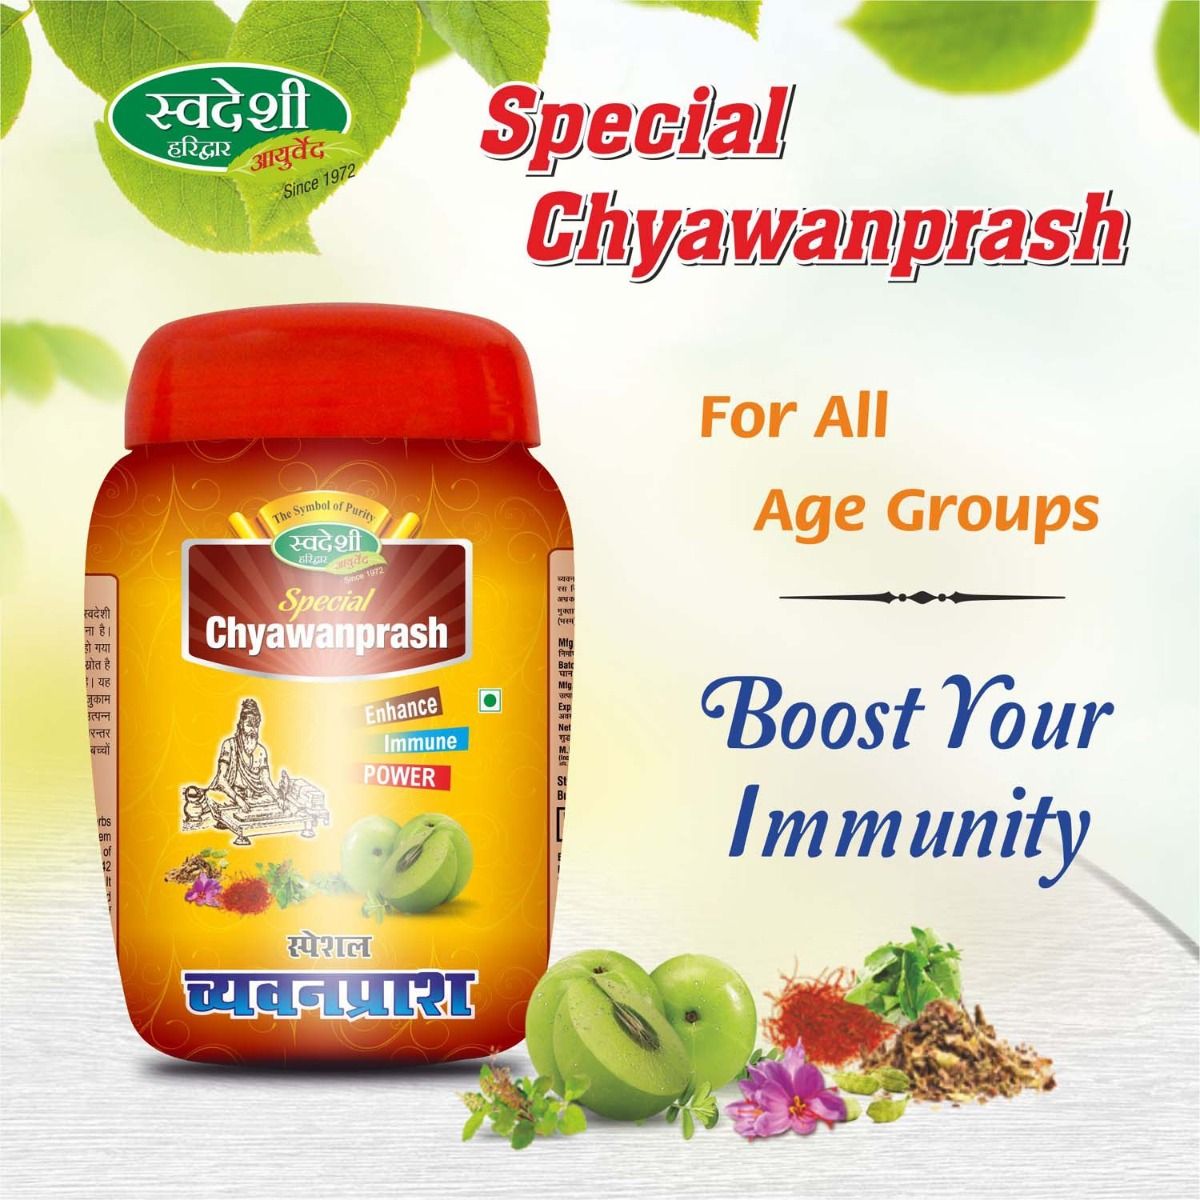 Swadeshi Special Chyawanprash, 1 kg, Pack of 1 